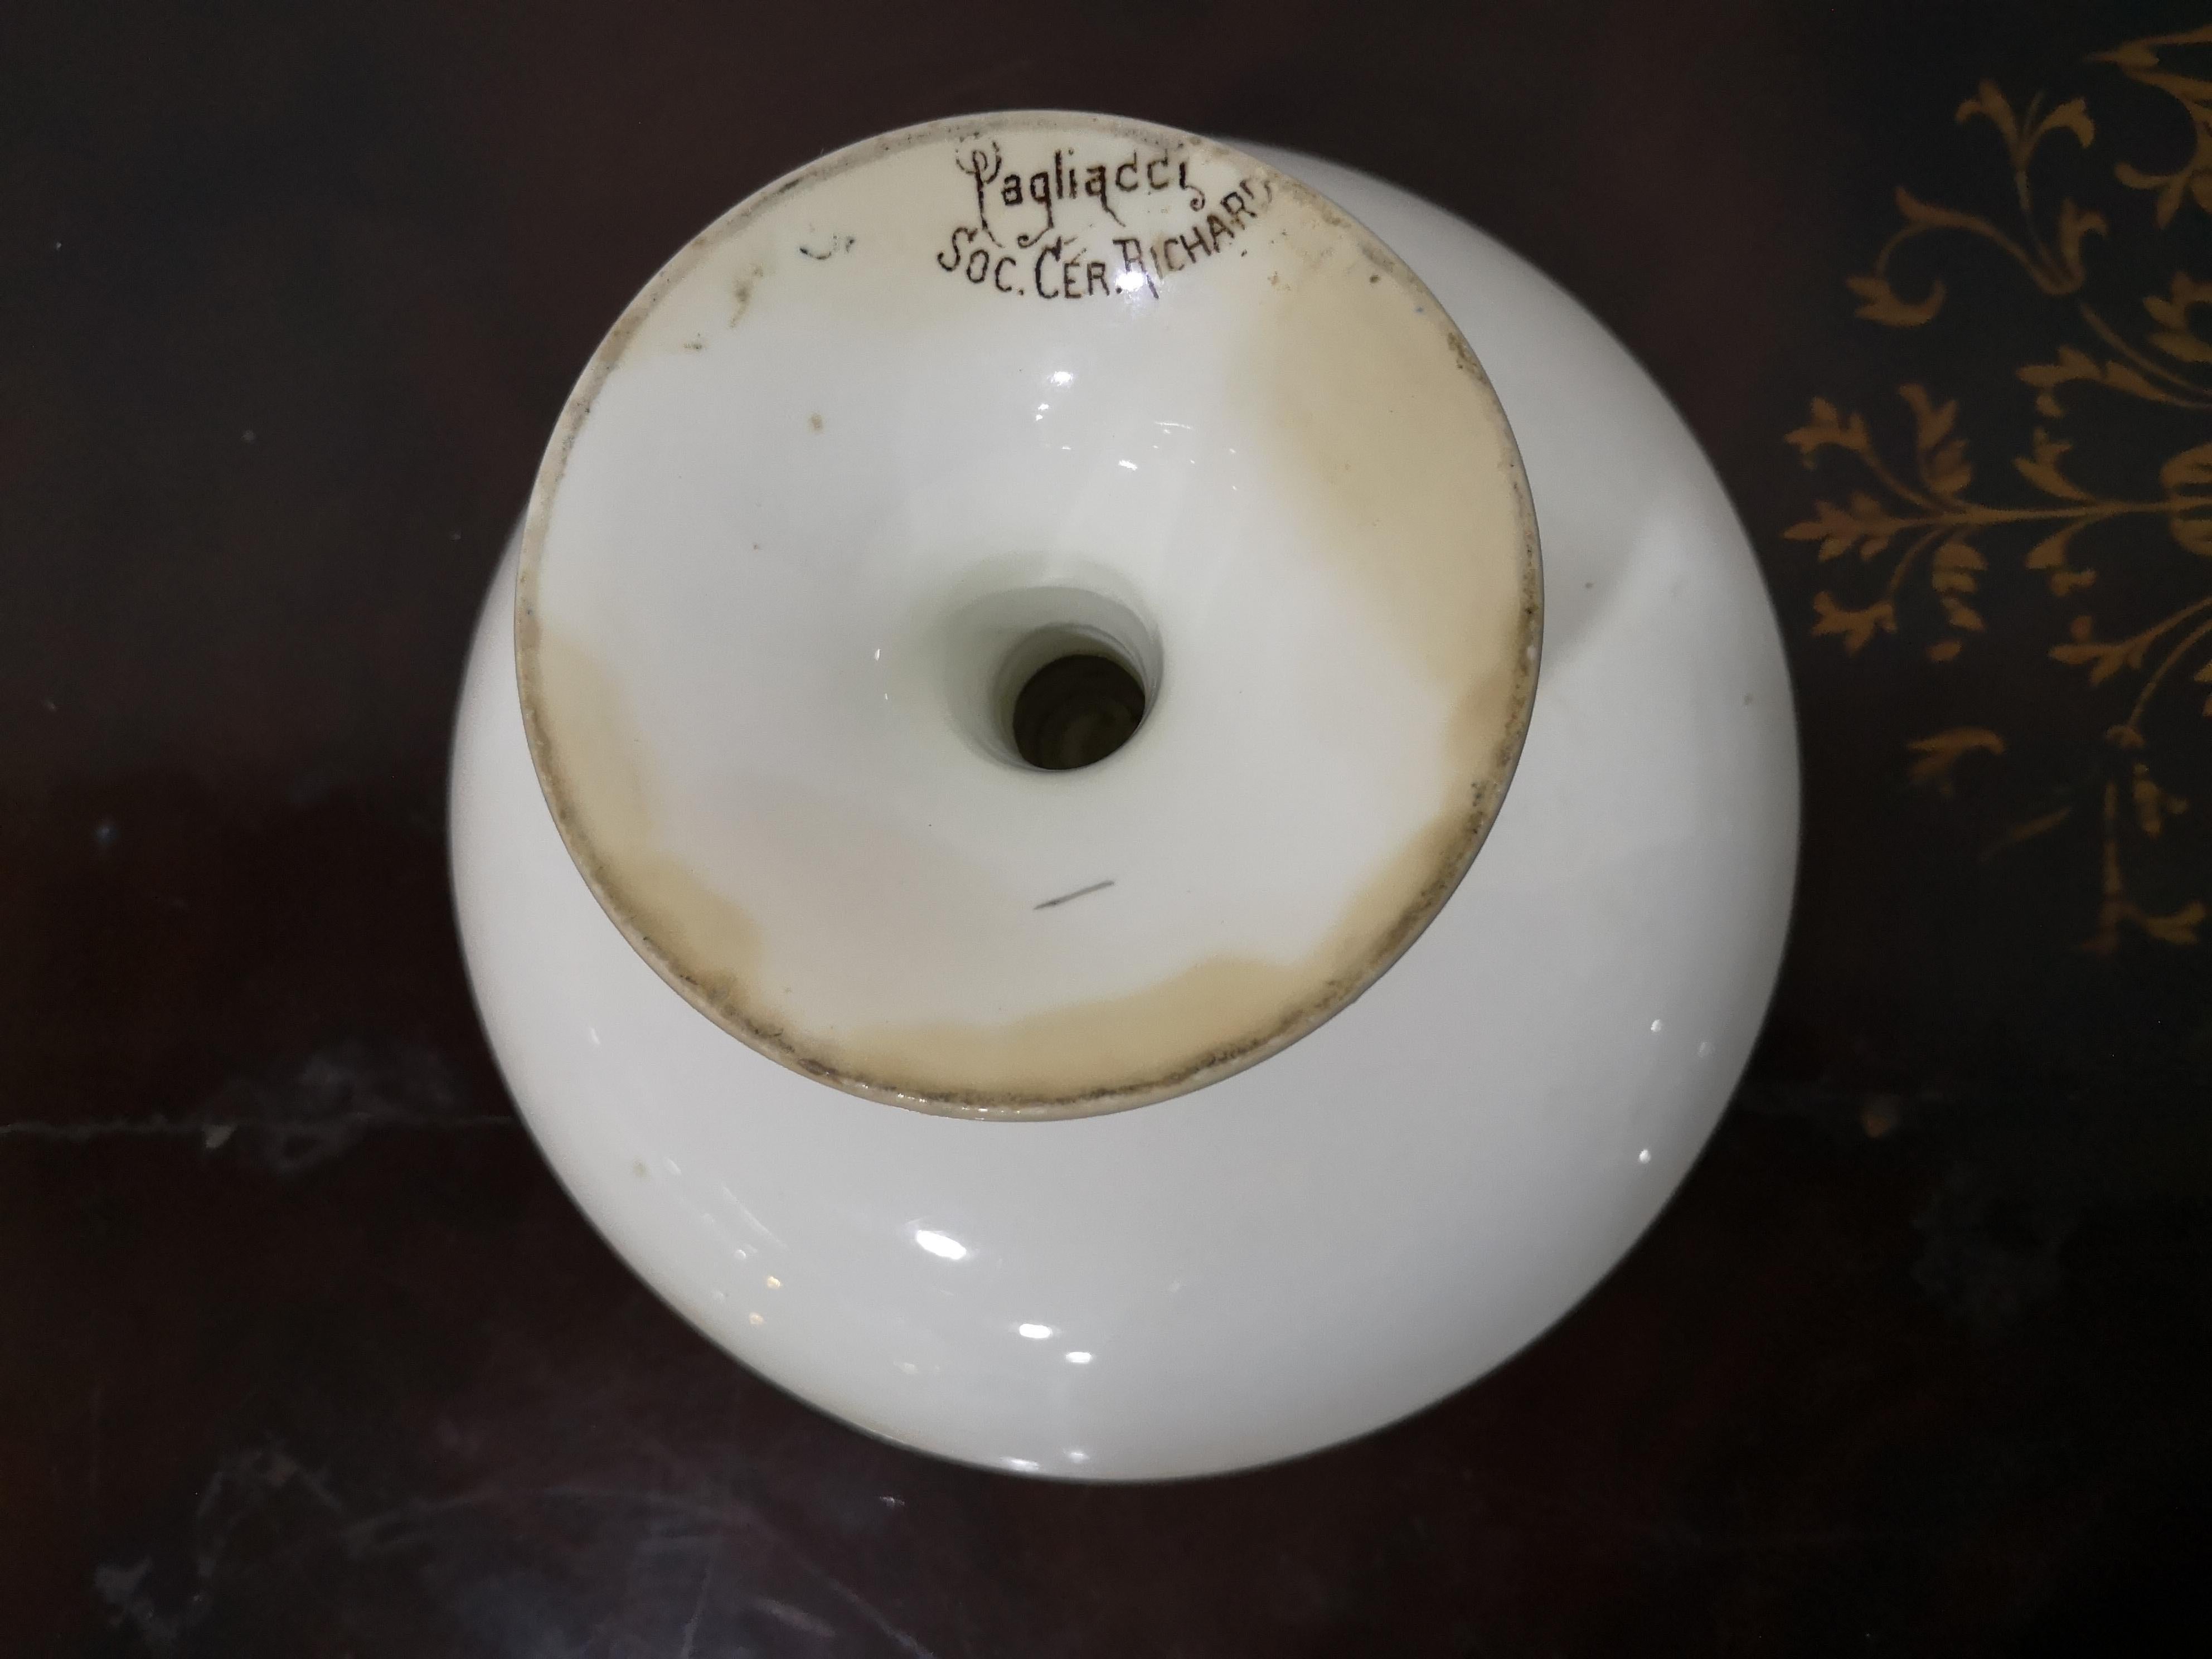 Porcelaine Coppia Alzate Società Ceramiche Richard in Terraglia Serie 